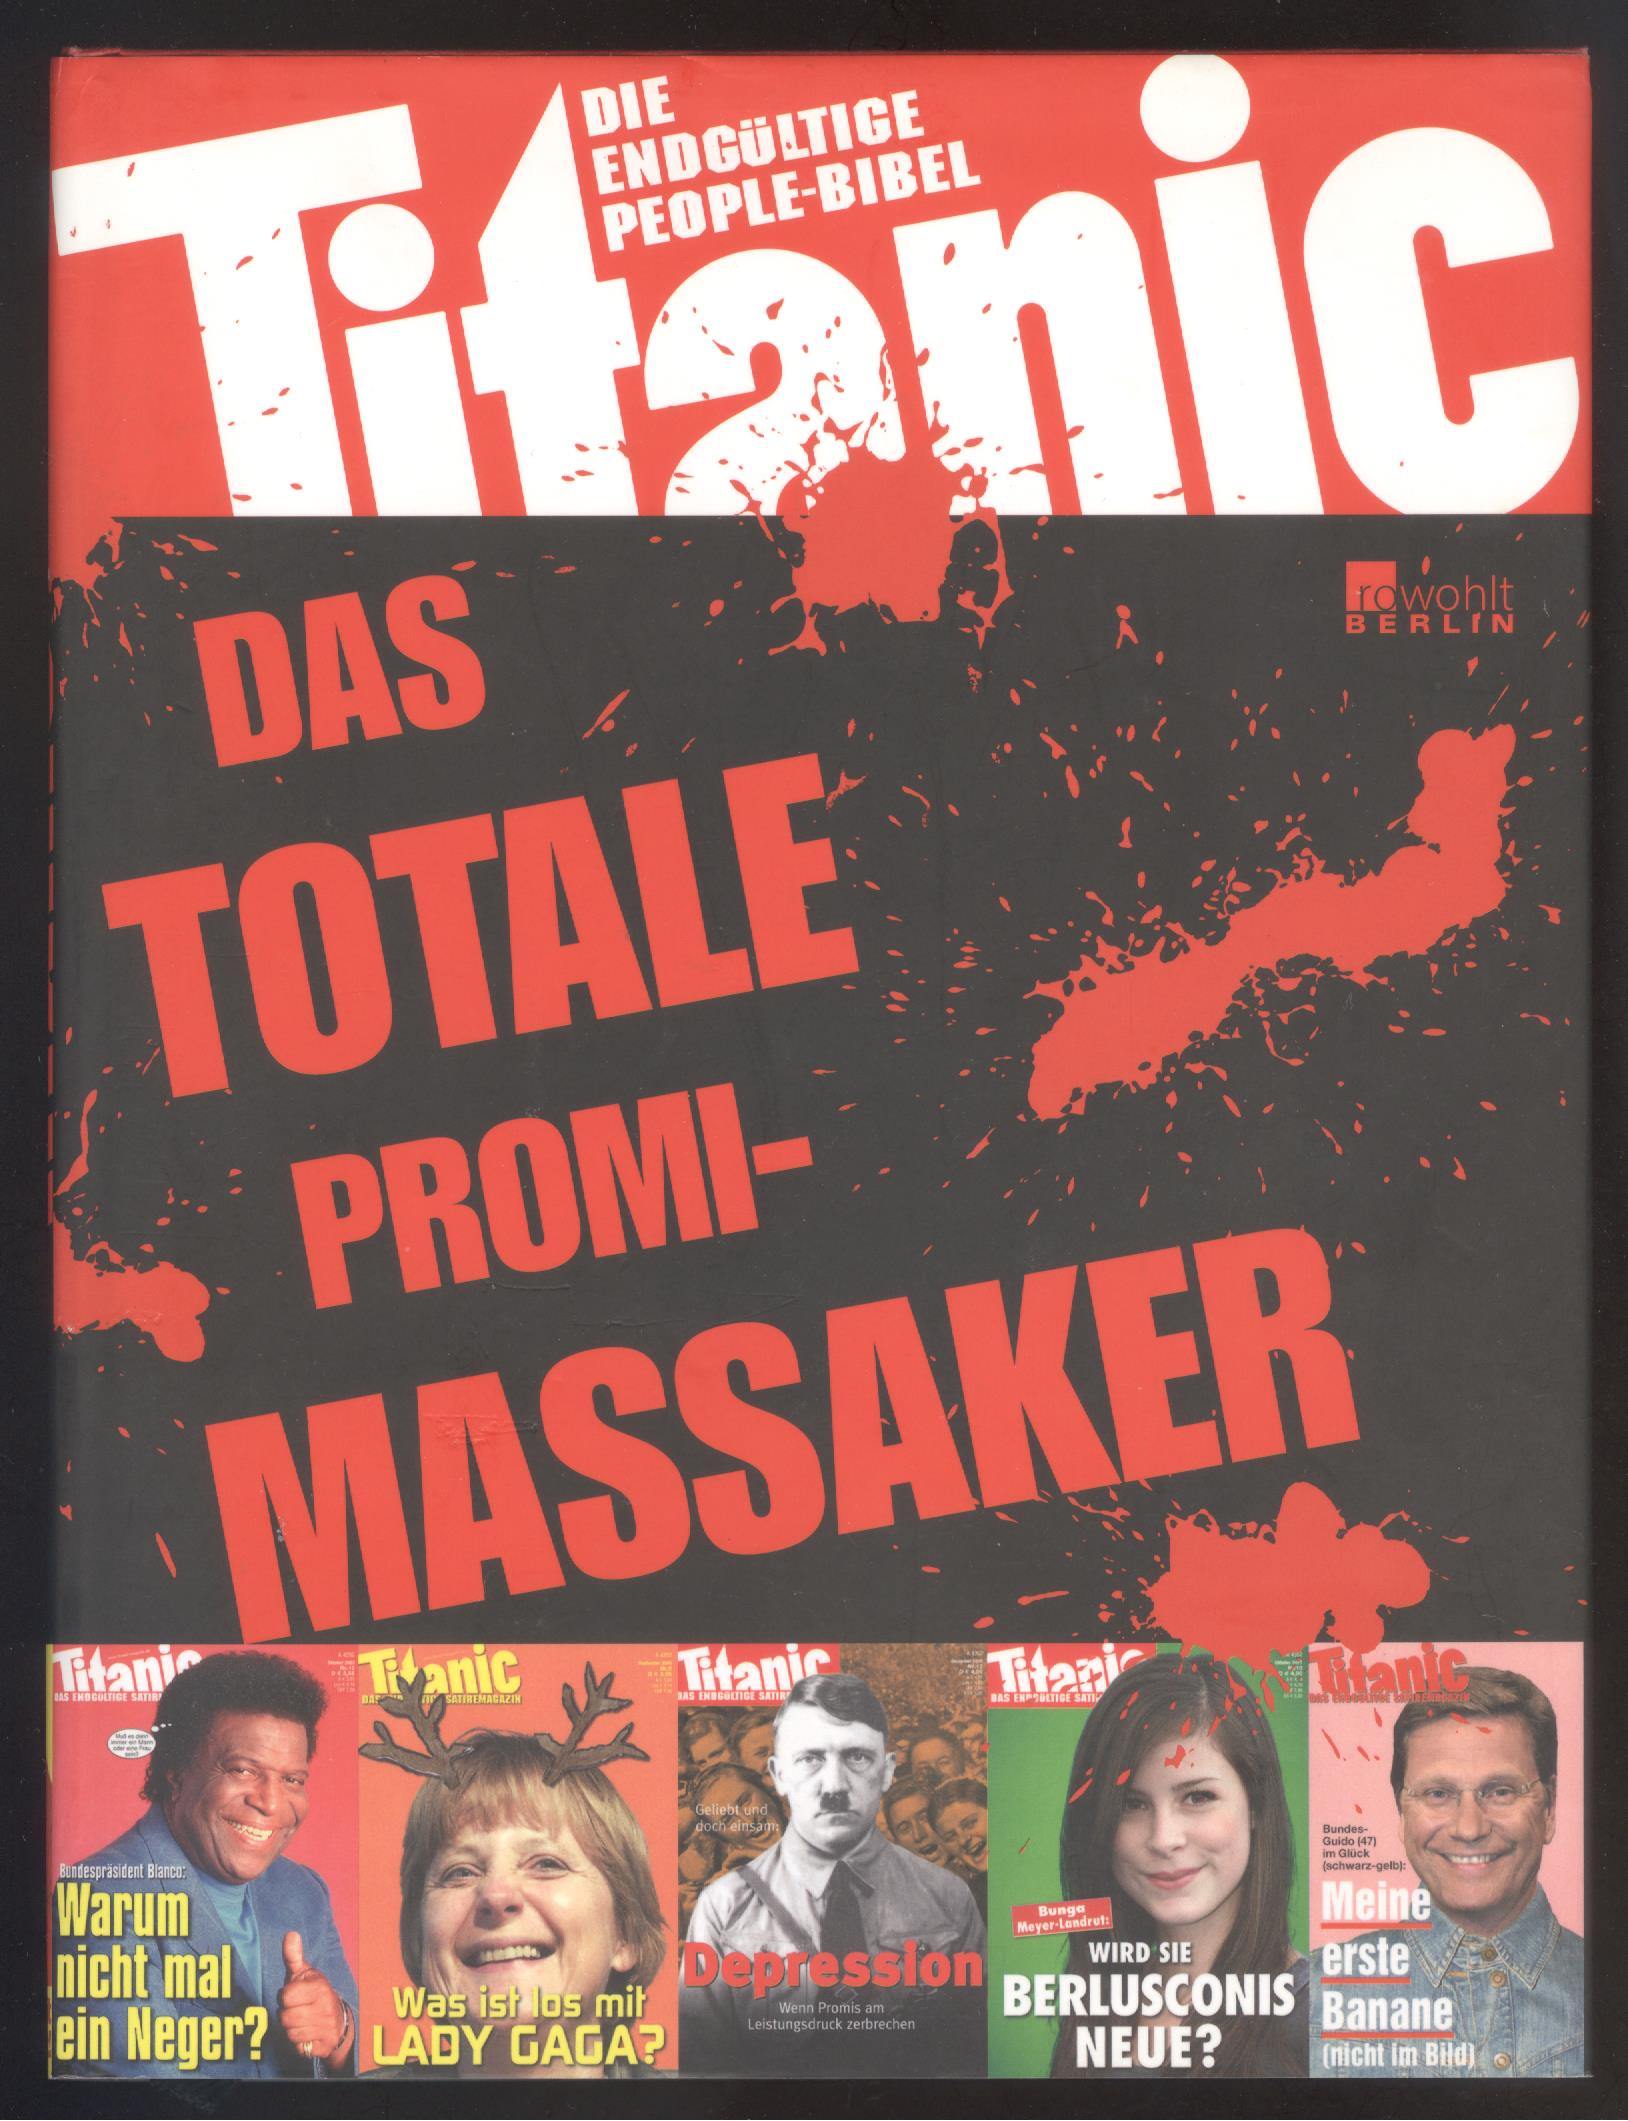 Das totale Promi-Massaker. Titanic - die endgültige People-Bibel.